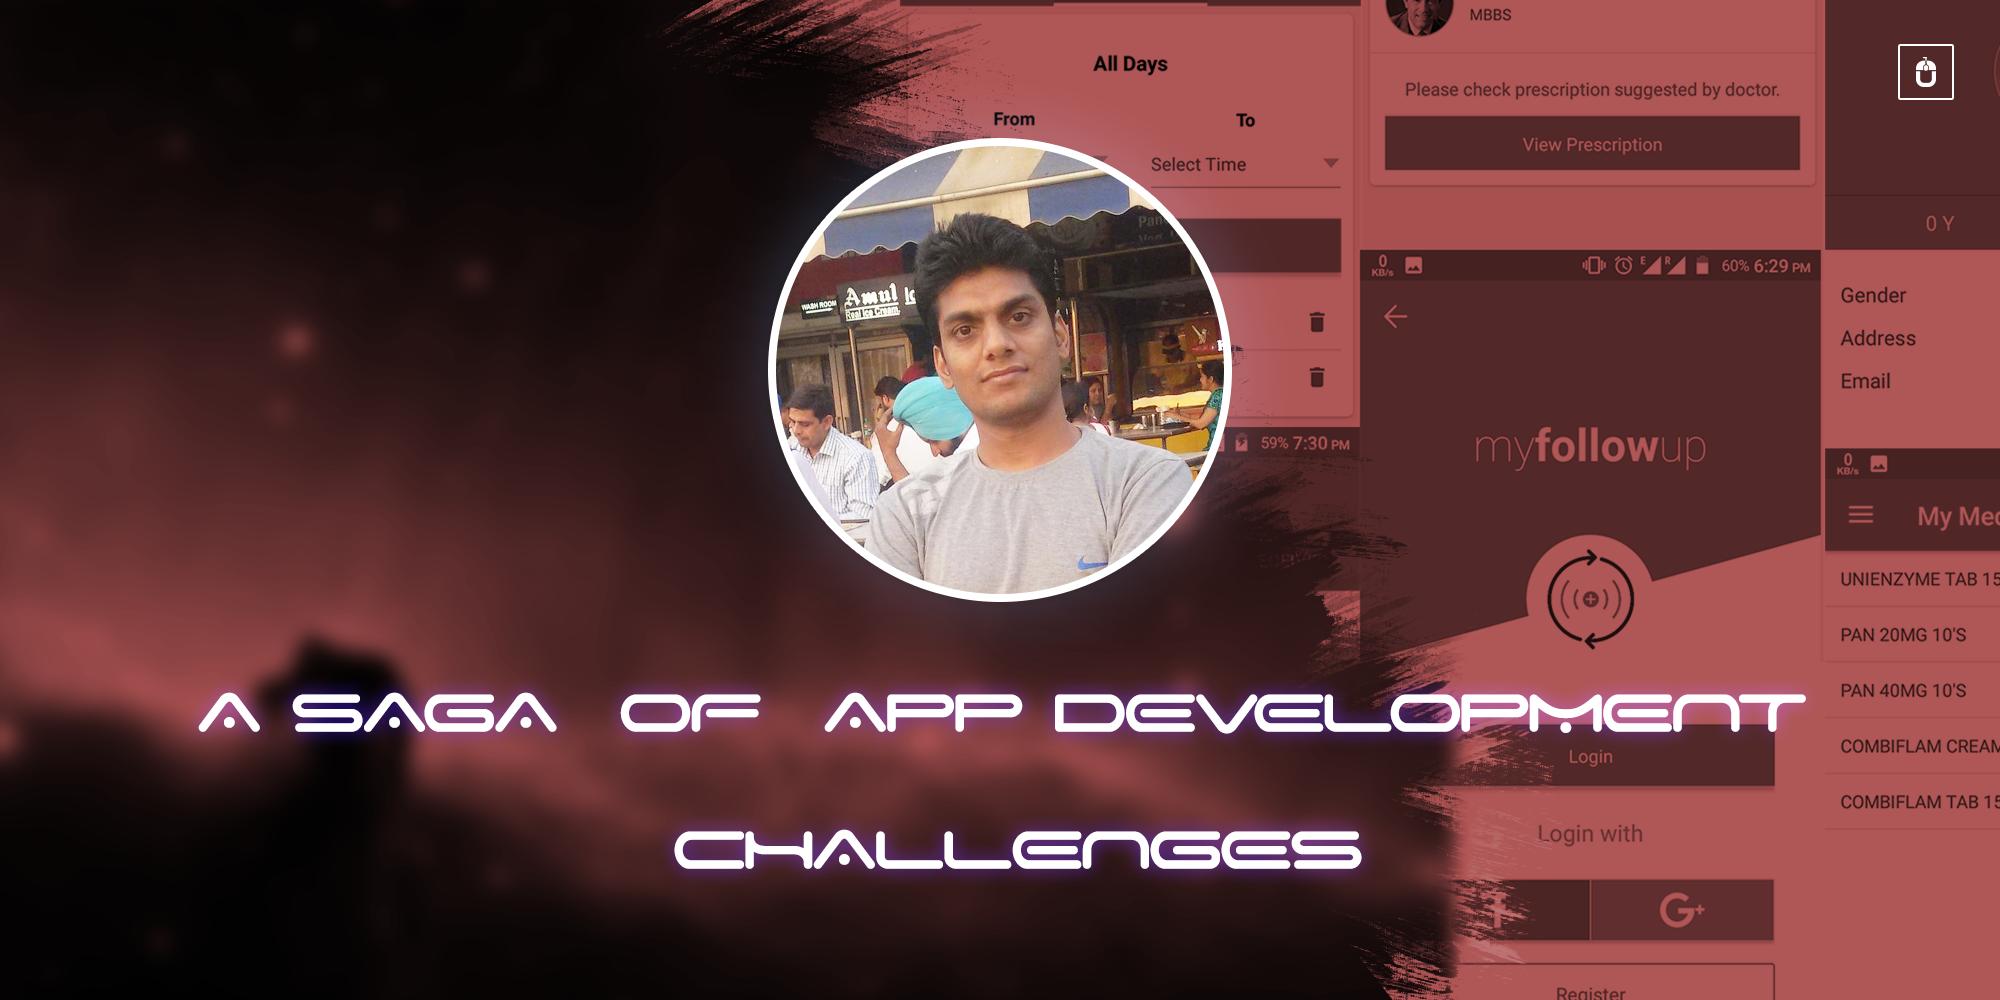 A Saga Of App Development Challenges